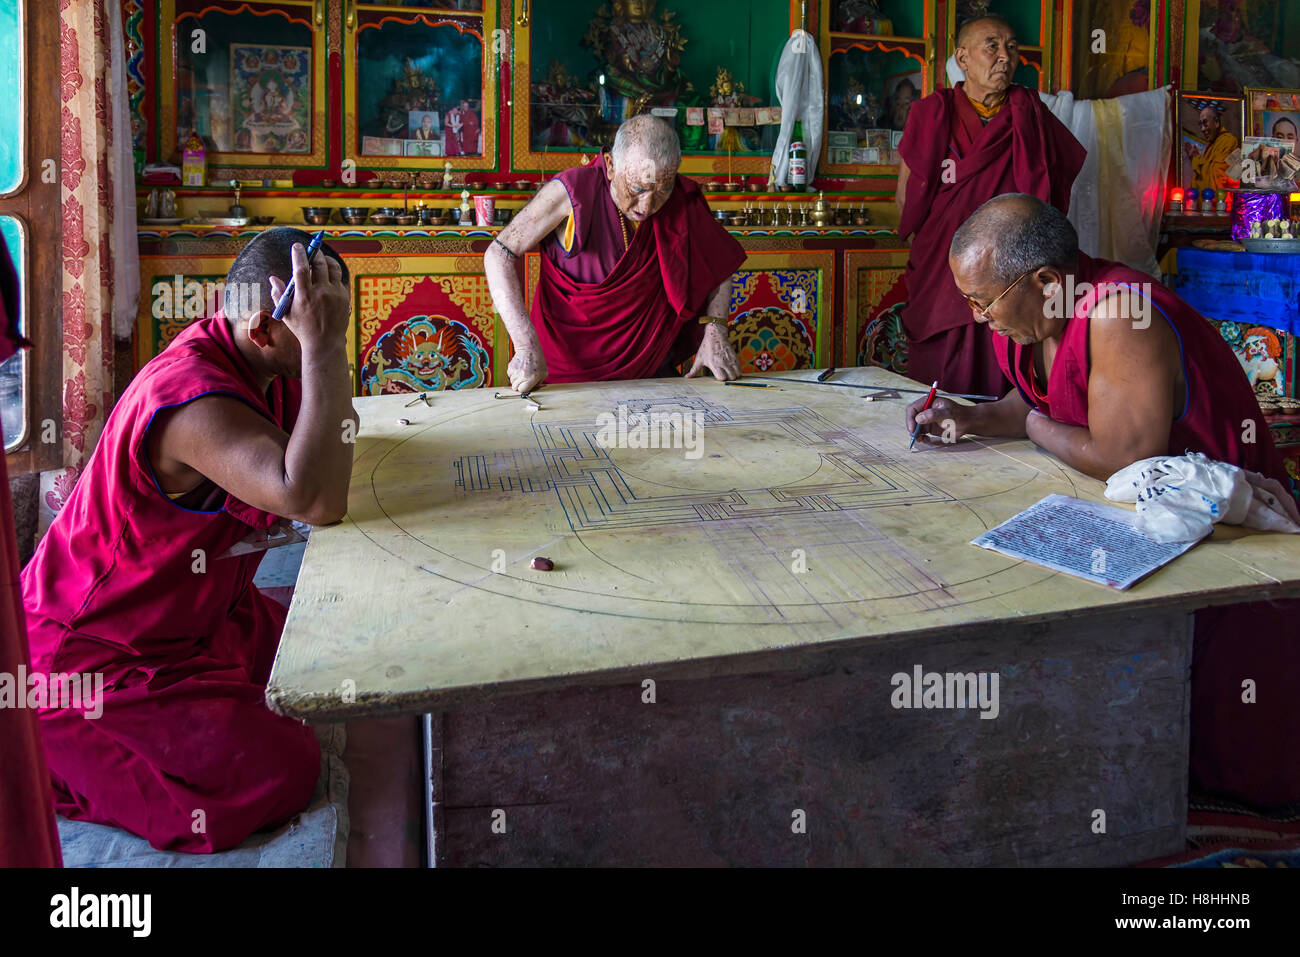 Diskit, India - August 20, 2015: Buddhist monks working on a mandala in monastery prayer hall Stock Photo